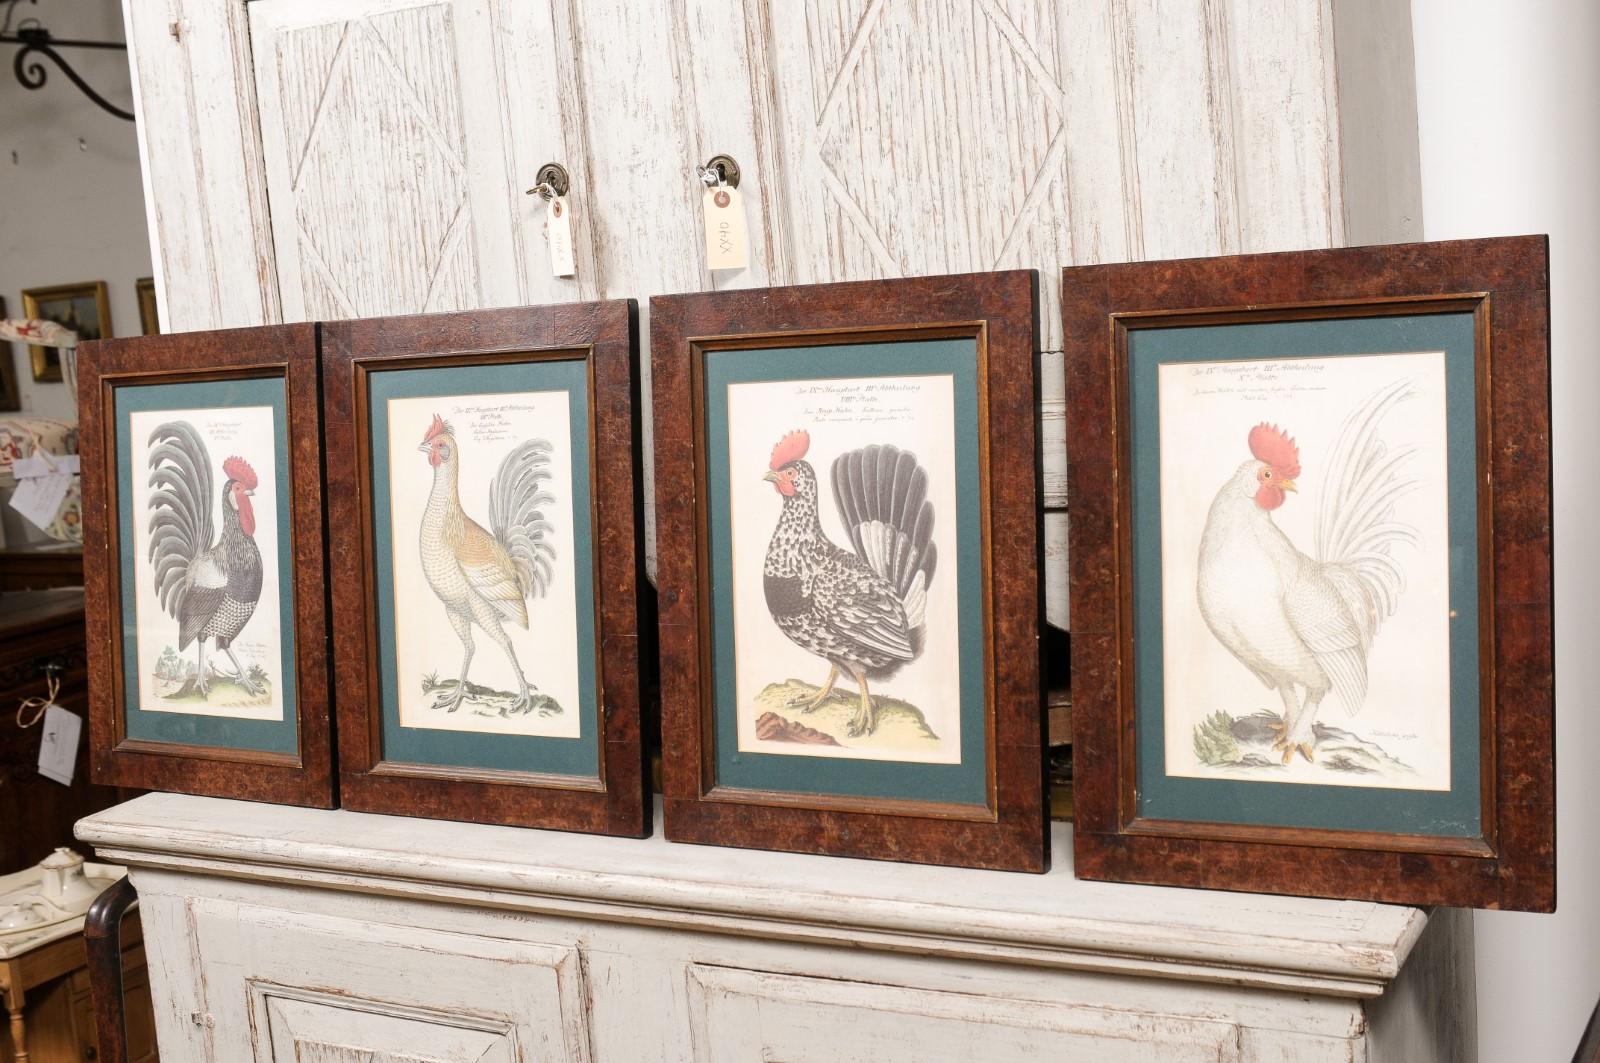 Turn of the Century German Cockerel Prints in Burr Walnut Frames, Set of Four For Sale 6